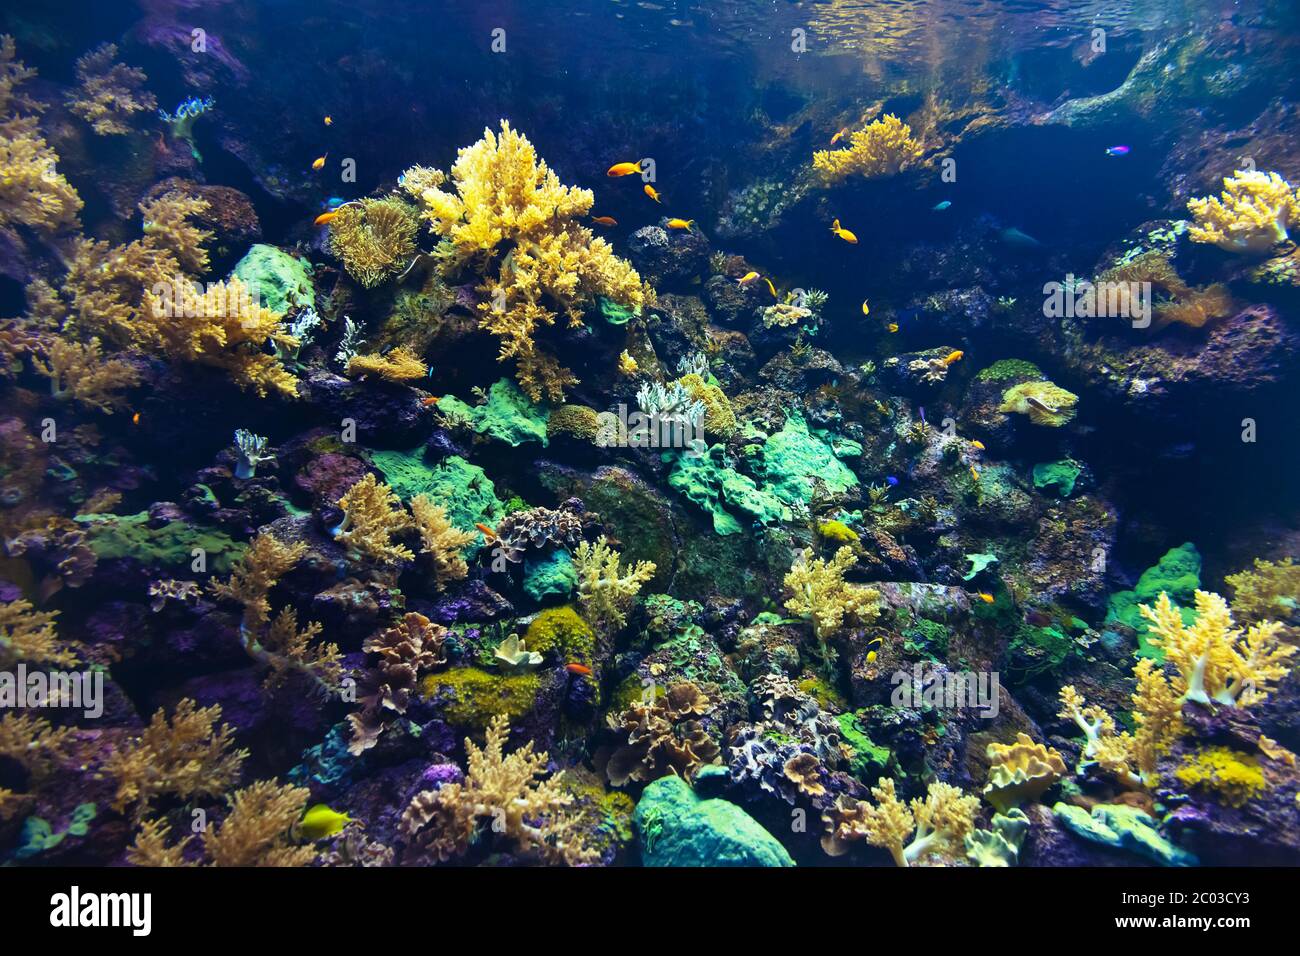 Fishes and corals reef in Aquarium Stock Photo